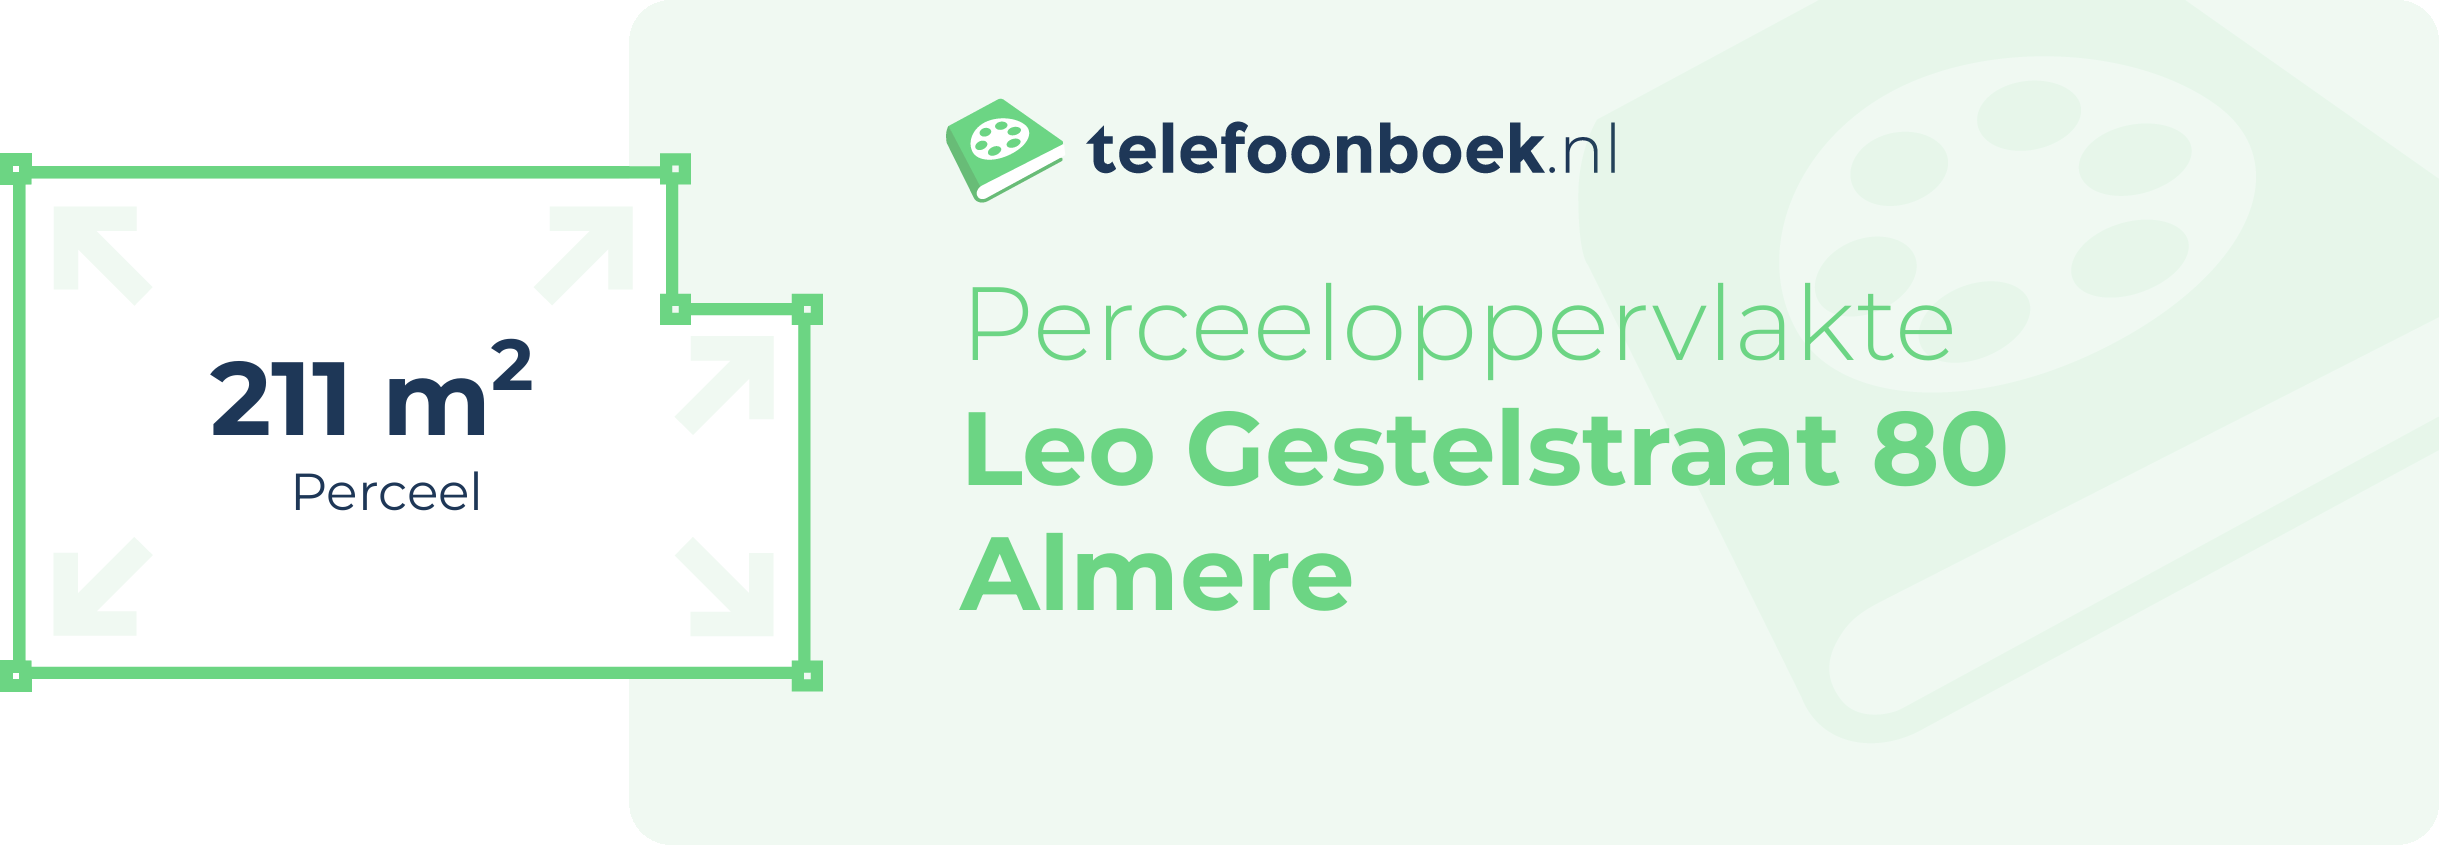 Perceeloppervlakte Leo Gestelstraat 80 Almere